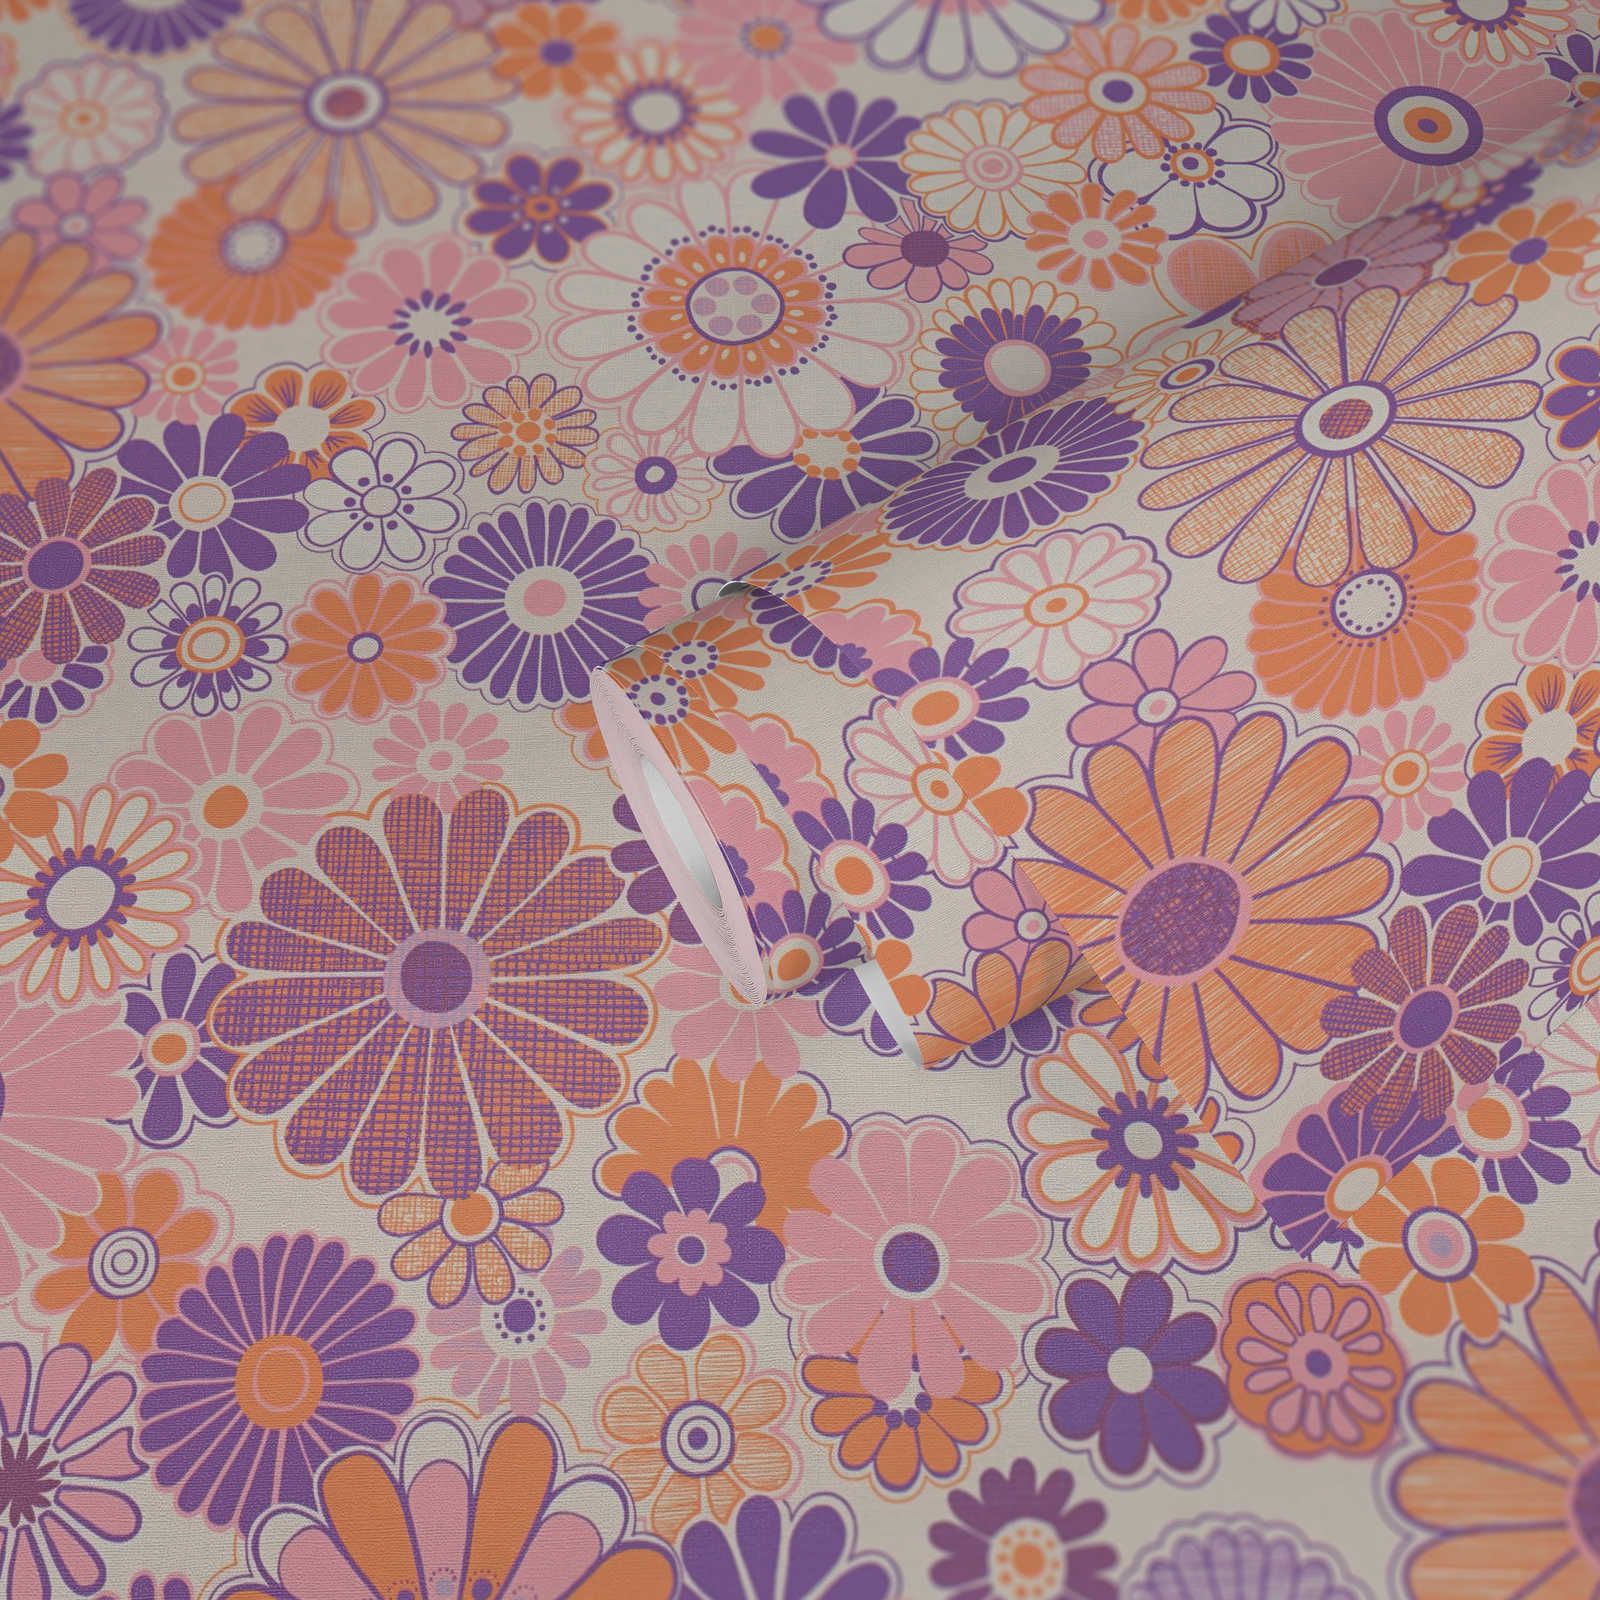             Papel pintado no tejido de textura ligera con motivos florales - morado, naranja, rosa
        